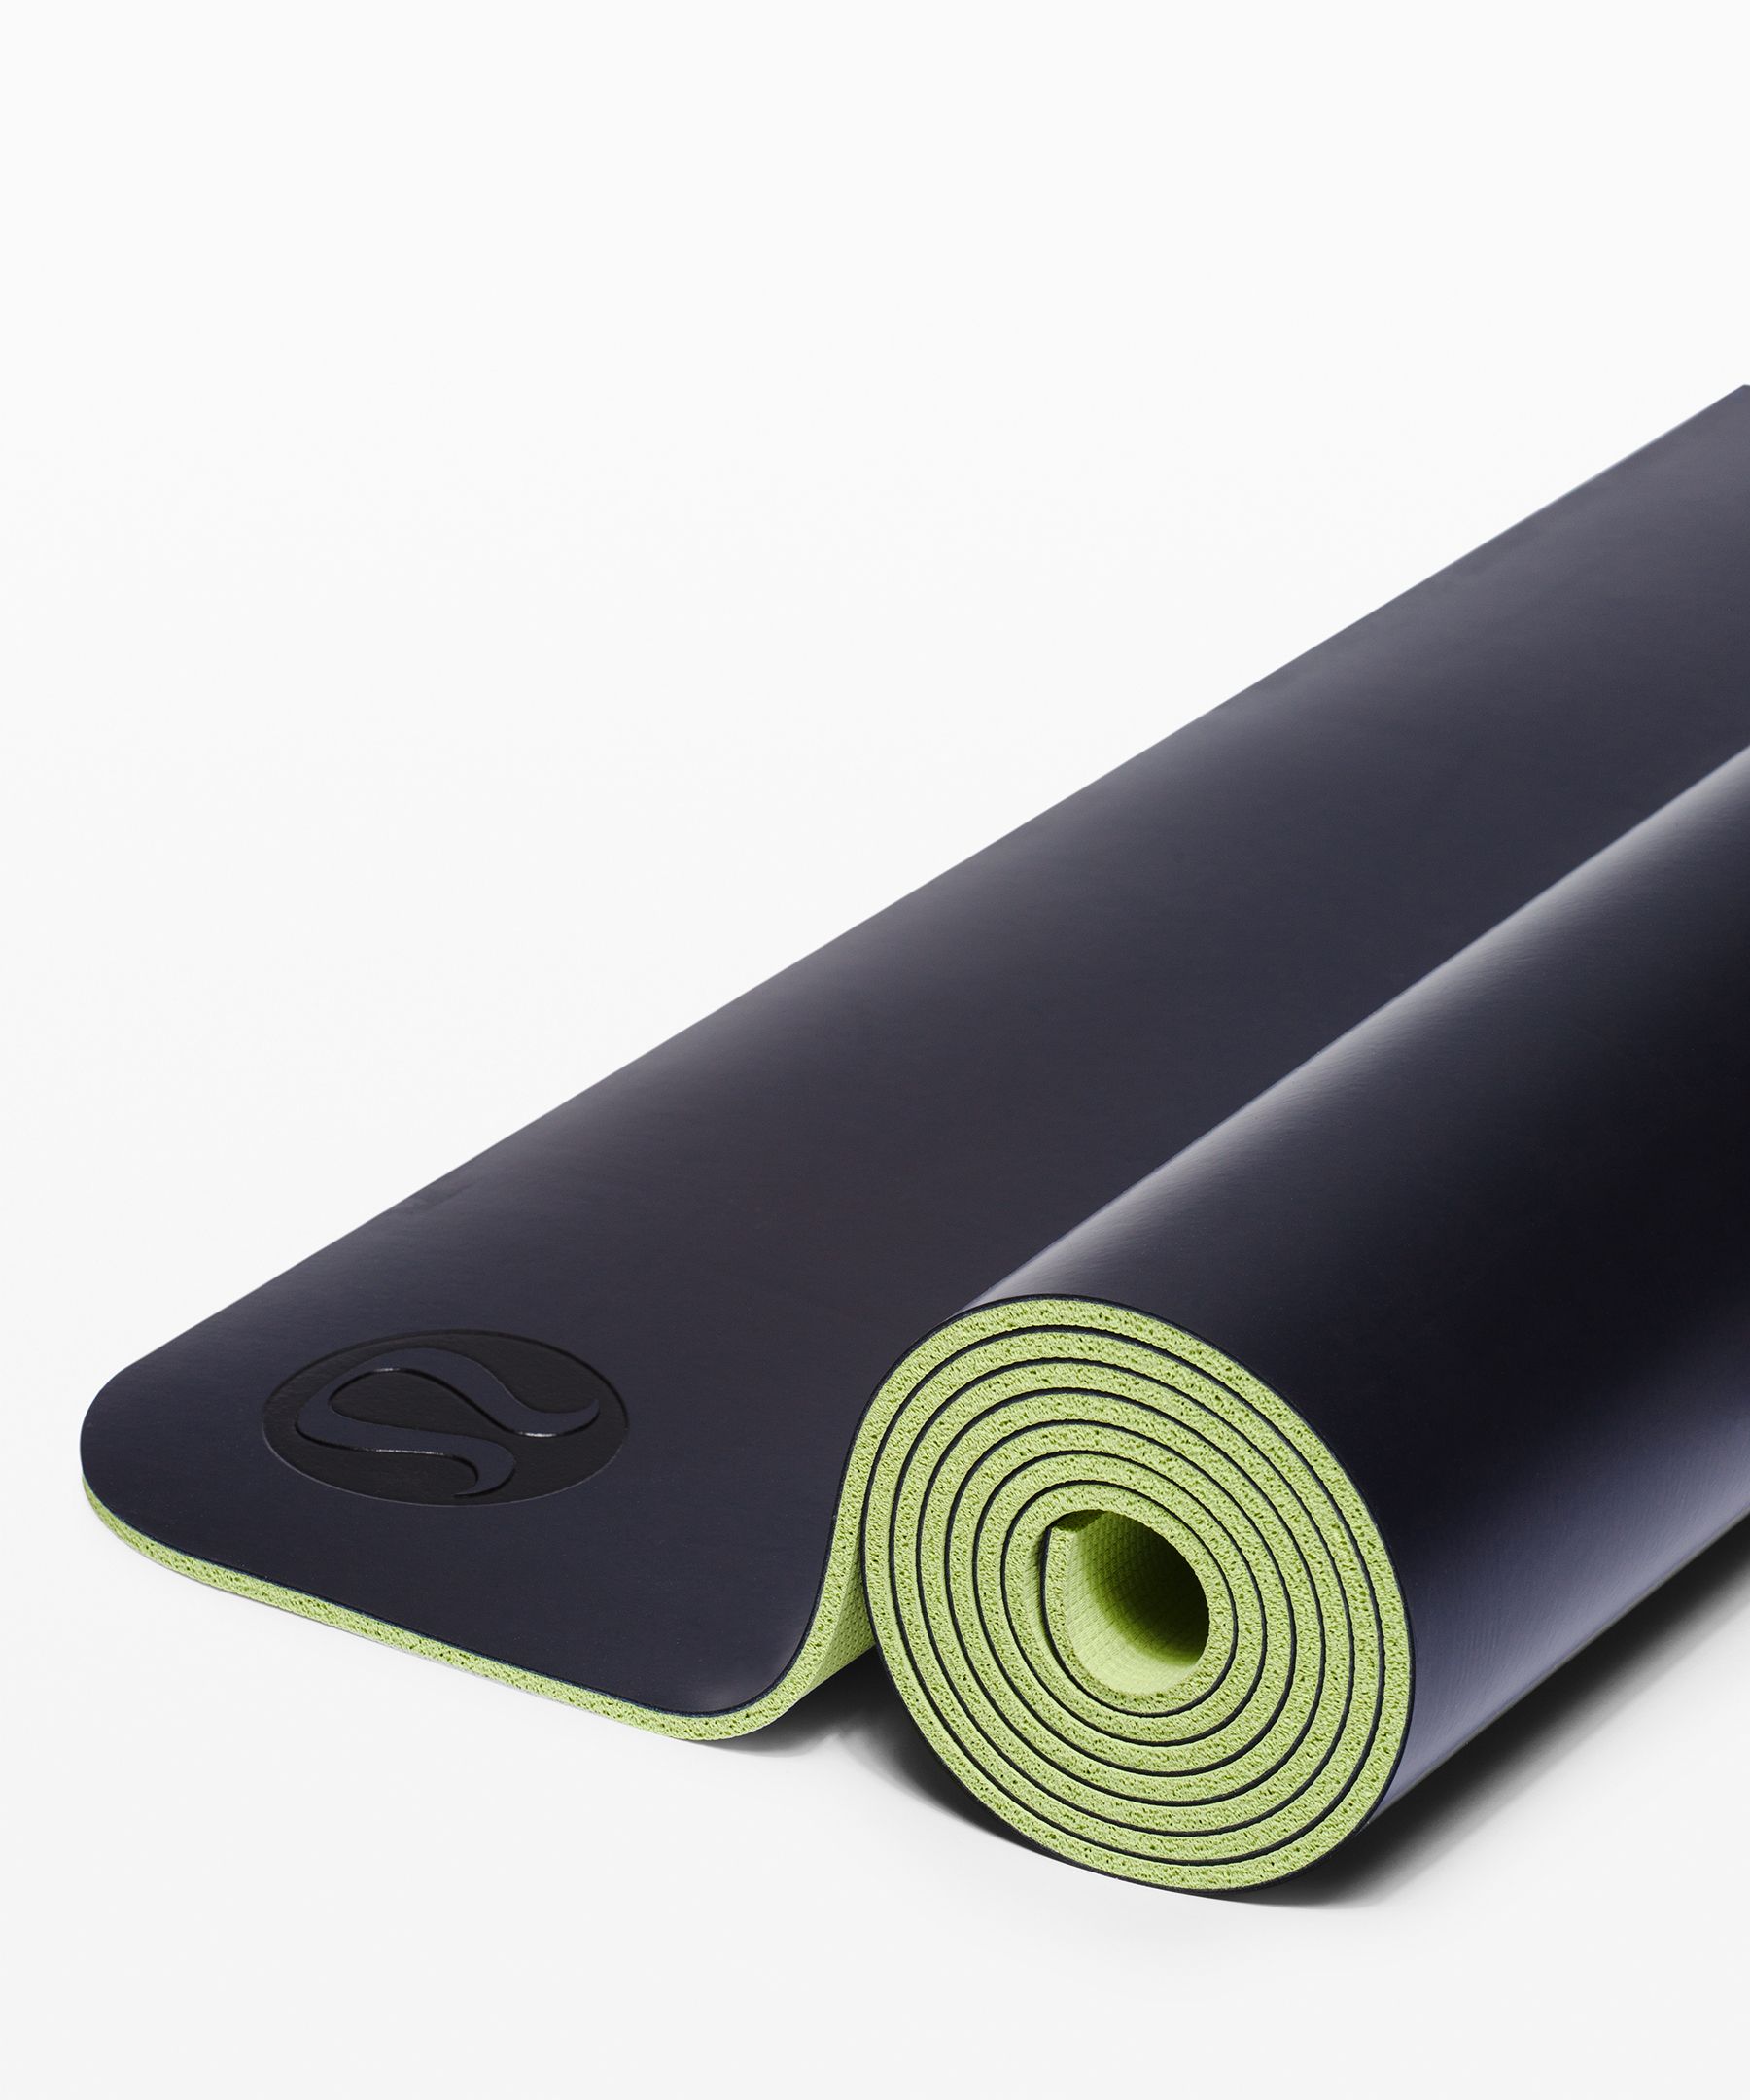 Lululemon Arise Yoga Mat 5mm FSC-certified Natural Rubber - Black